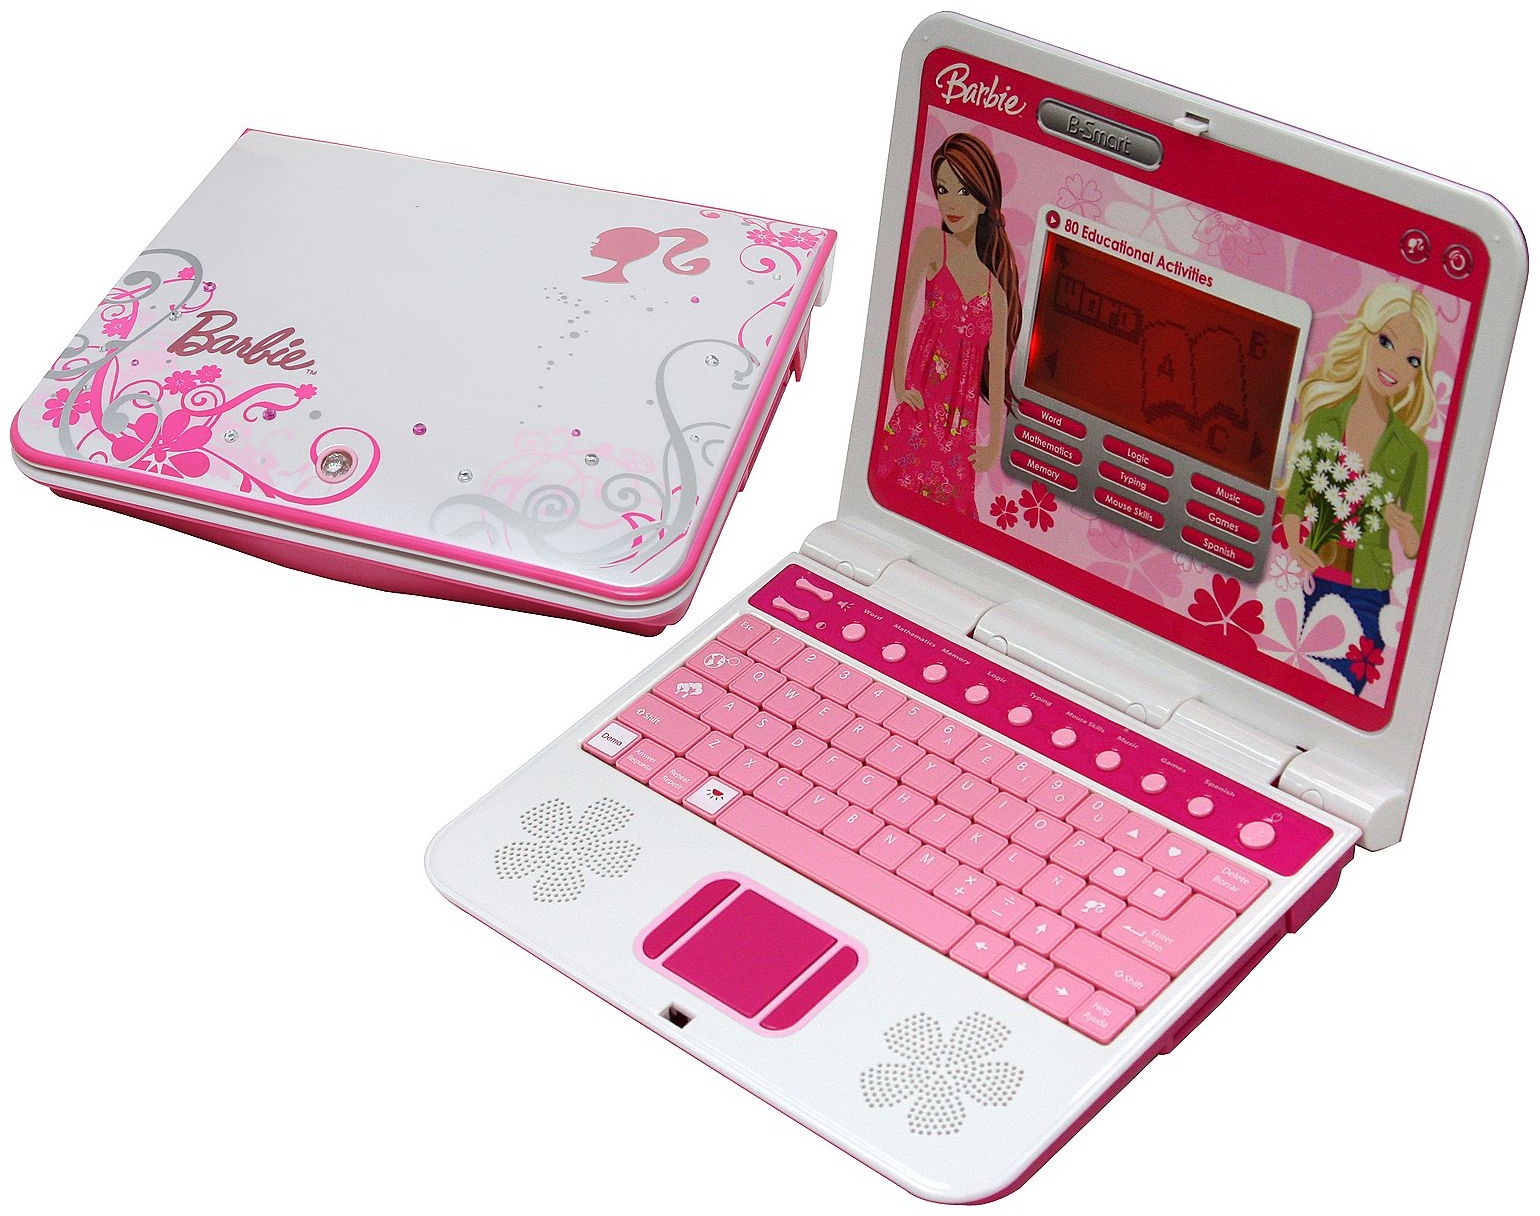 Barbie-laptop-BG68-09W-1